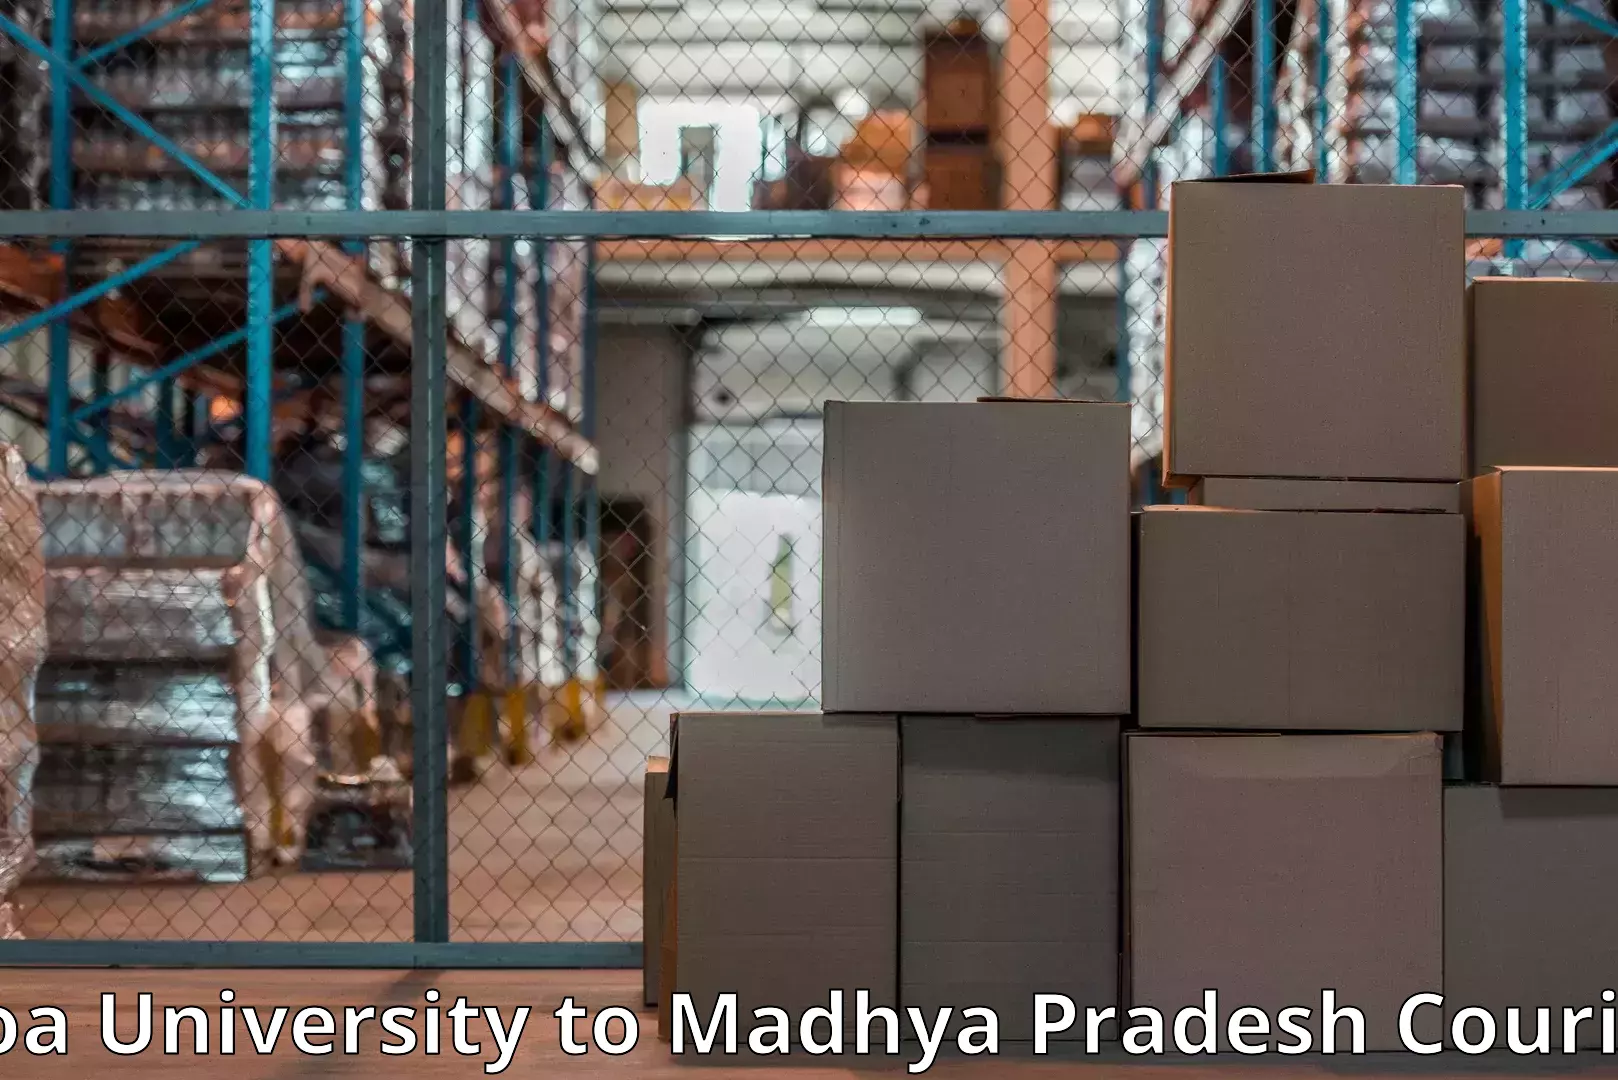 Efficient moving company Goa University to Burhar